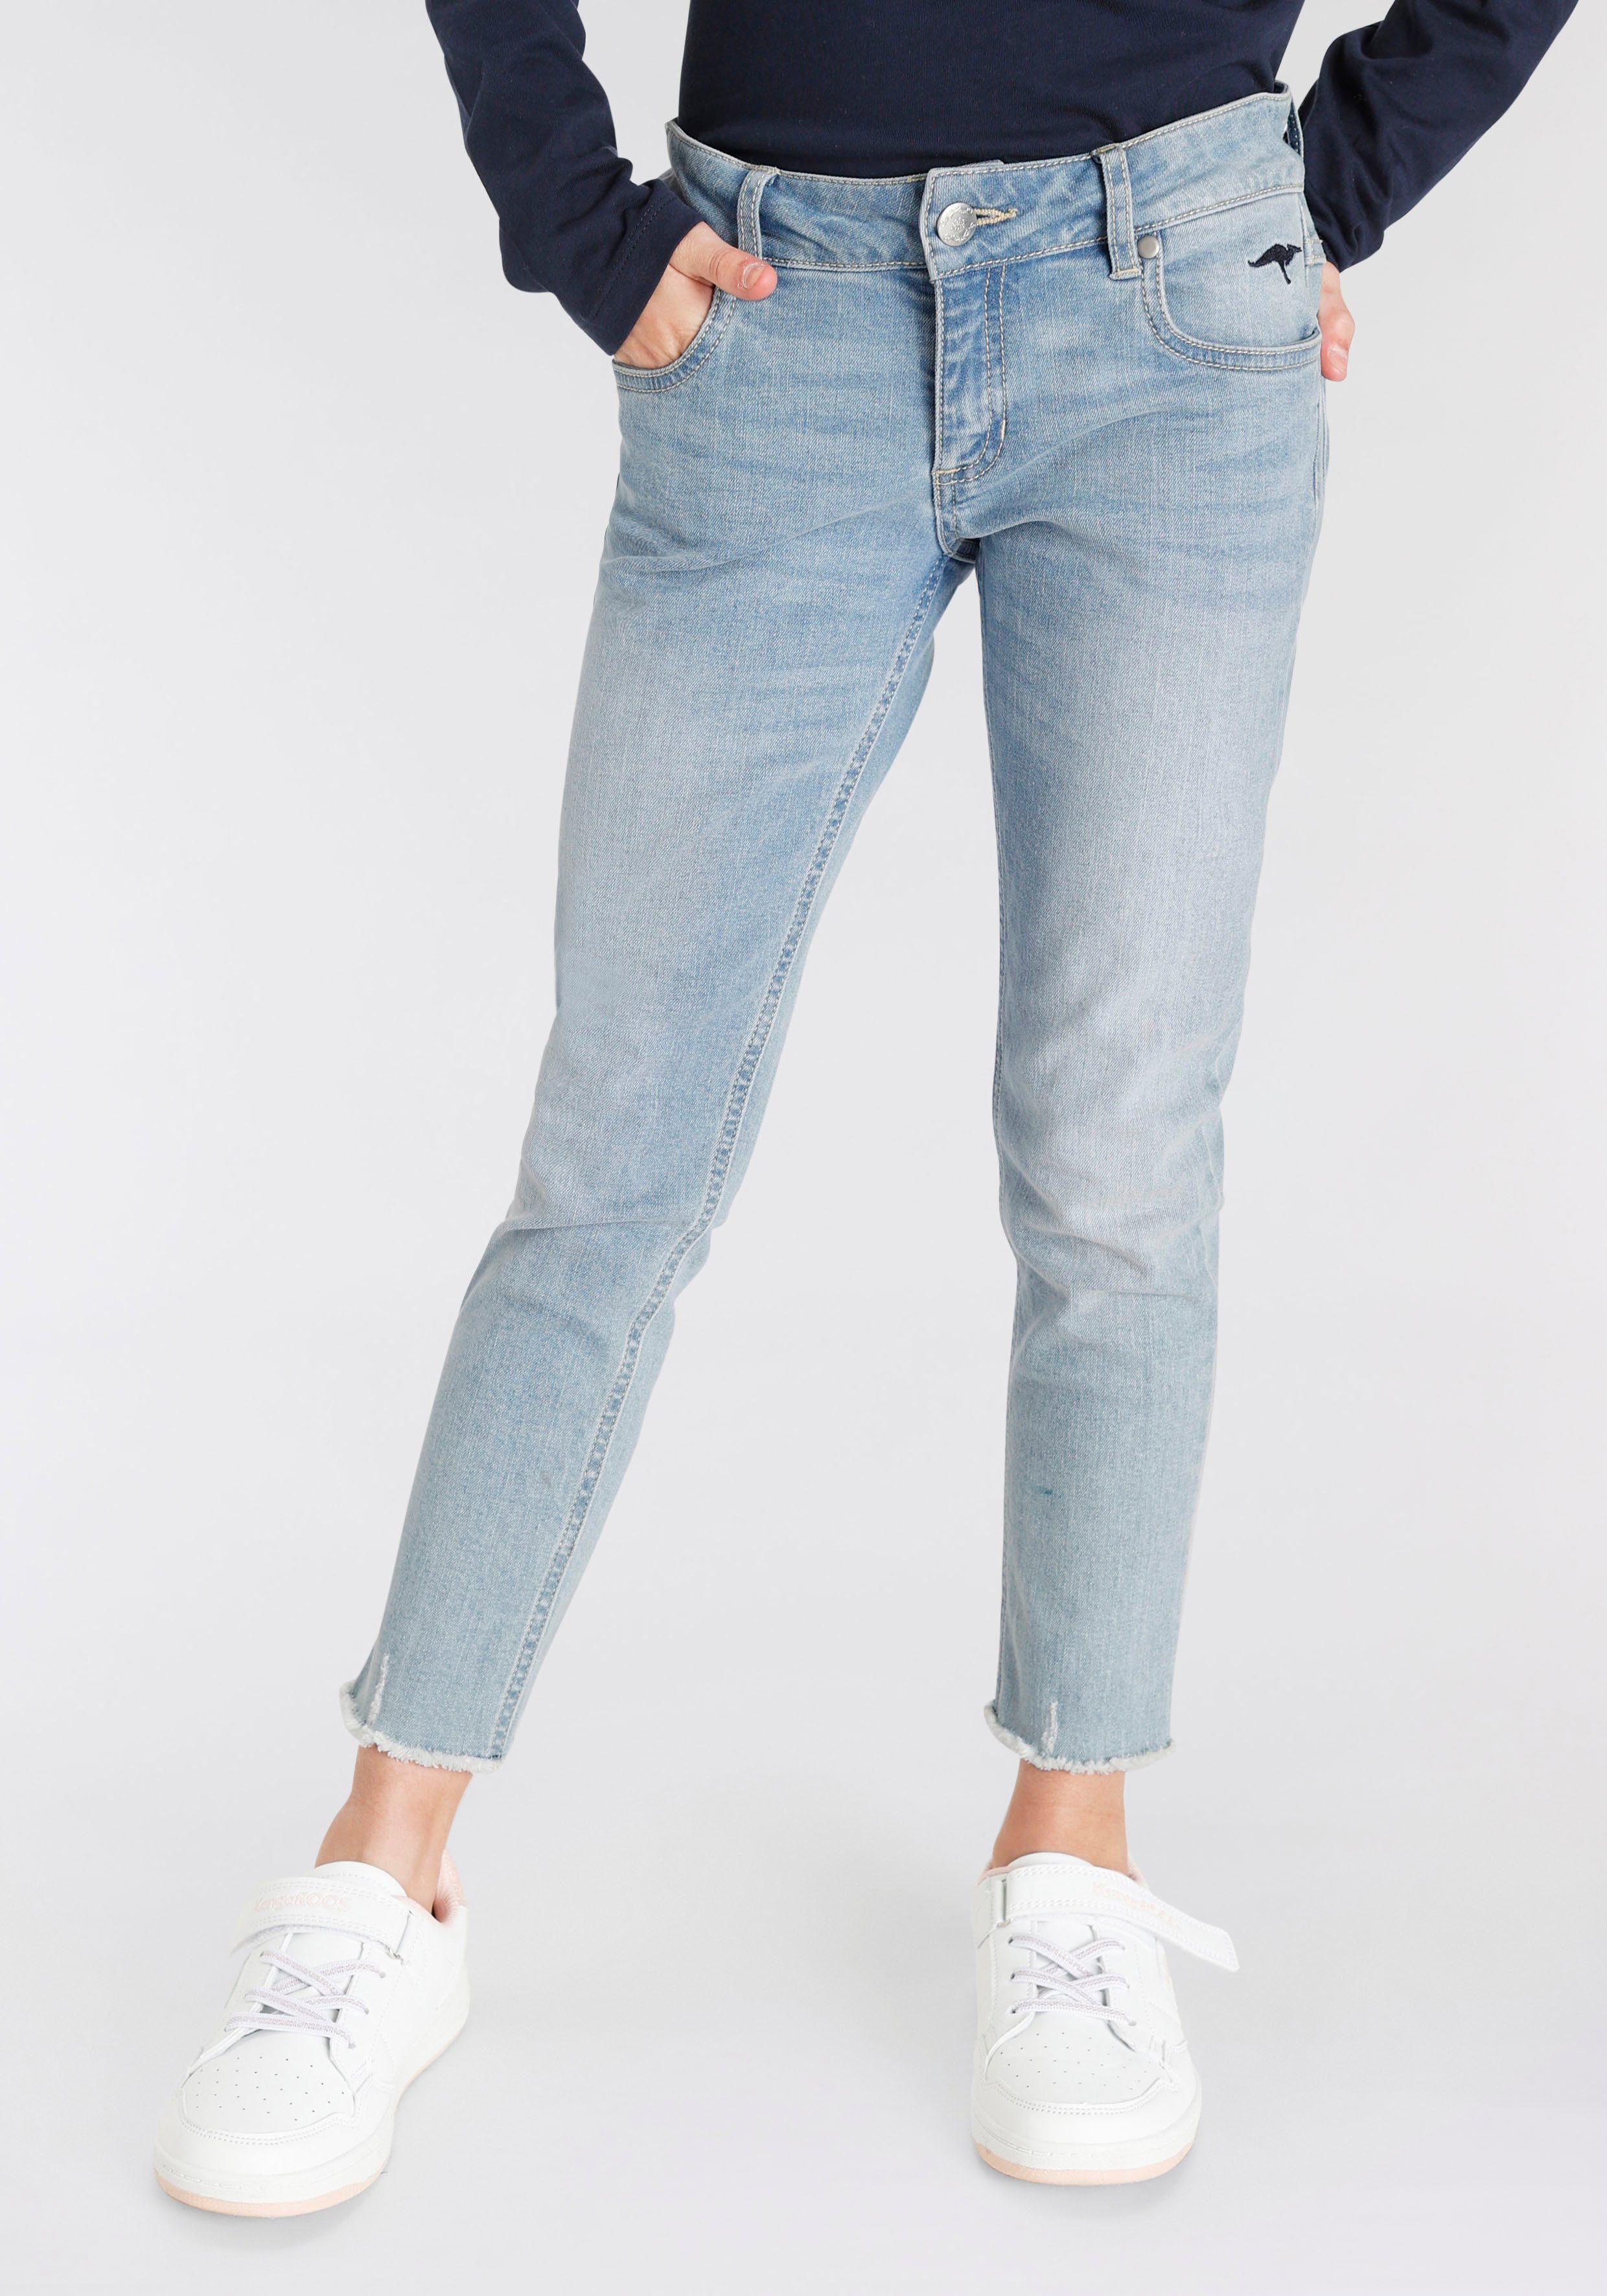 KangaROOS 7/8-Jeans mit geschnittener Saumkante | Stretchjeans